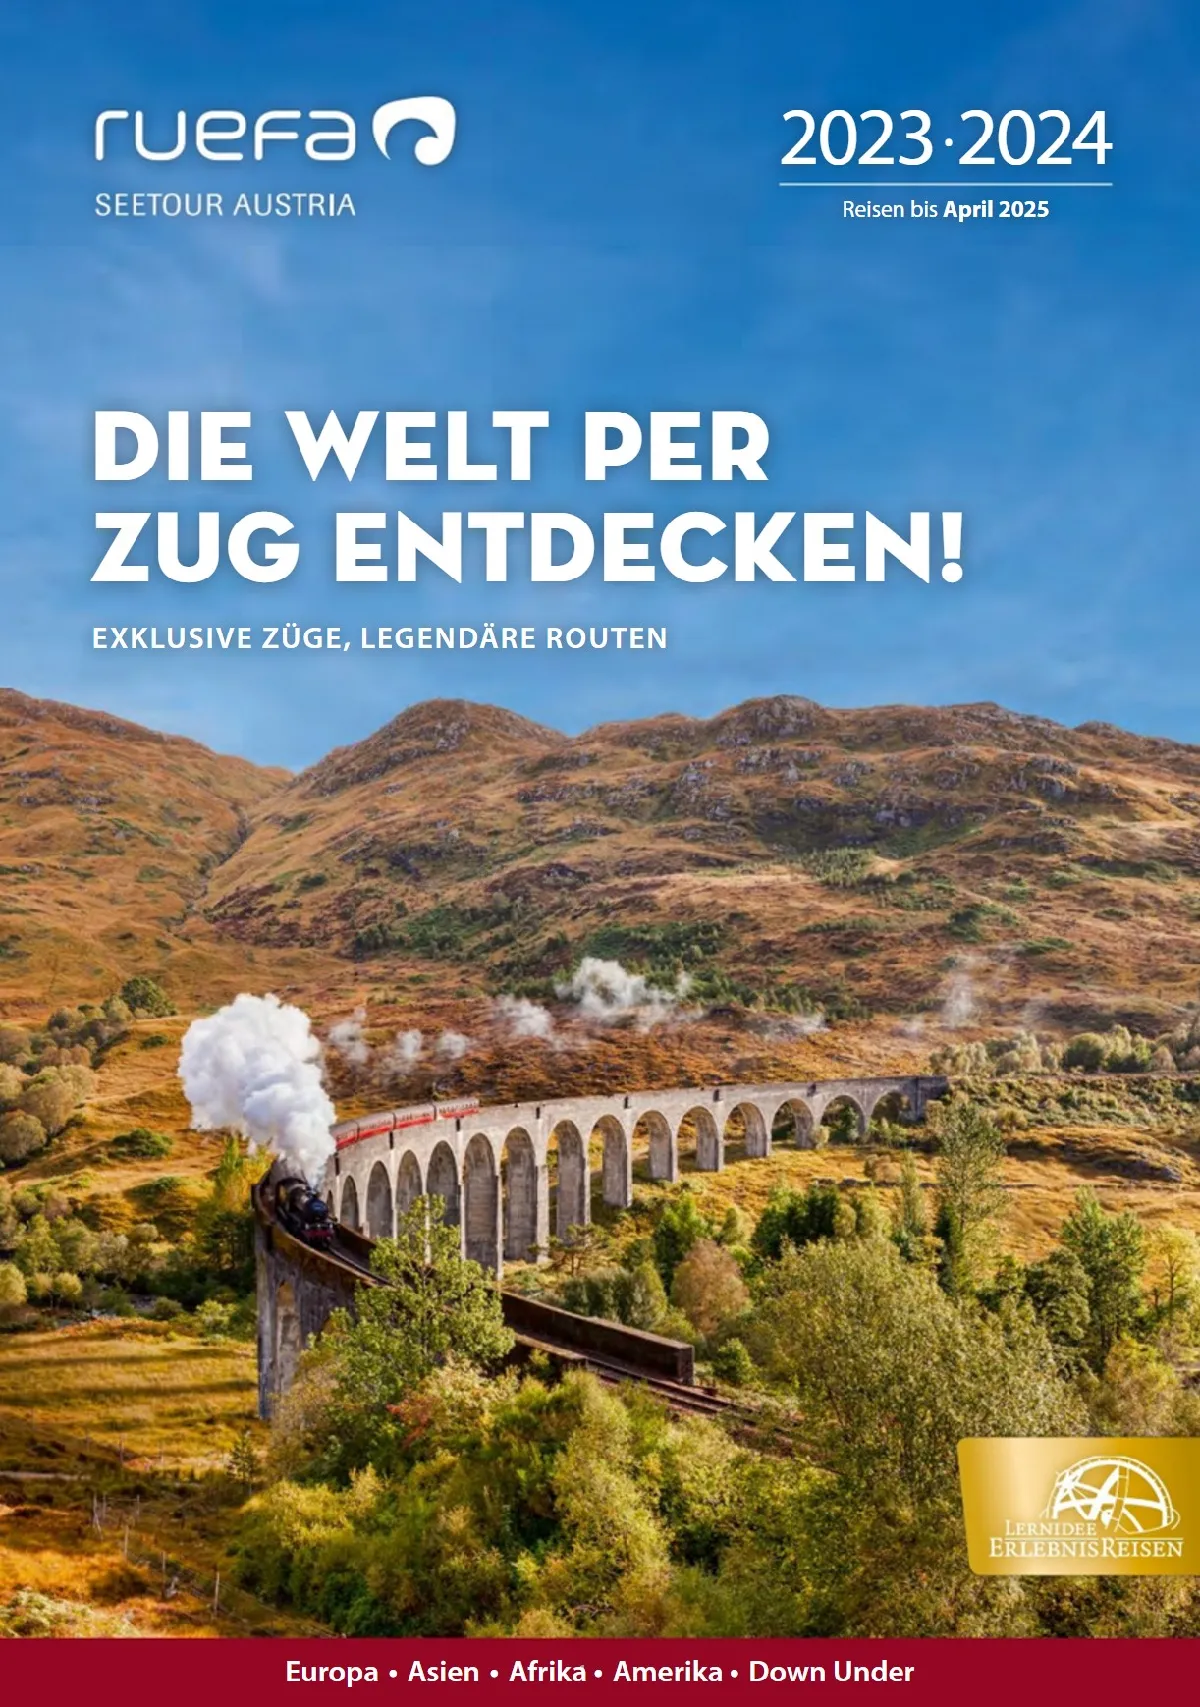 Lernidee Zugreisen 2023-2024 catalogue cover